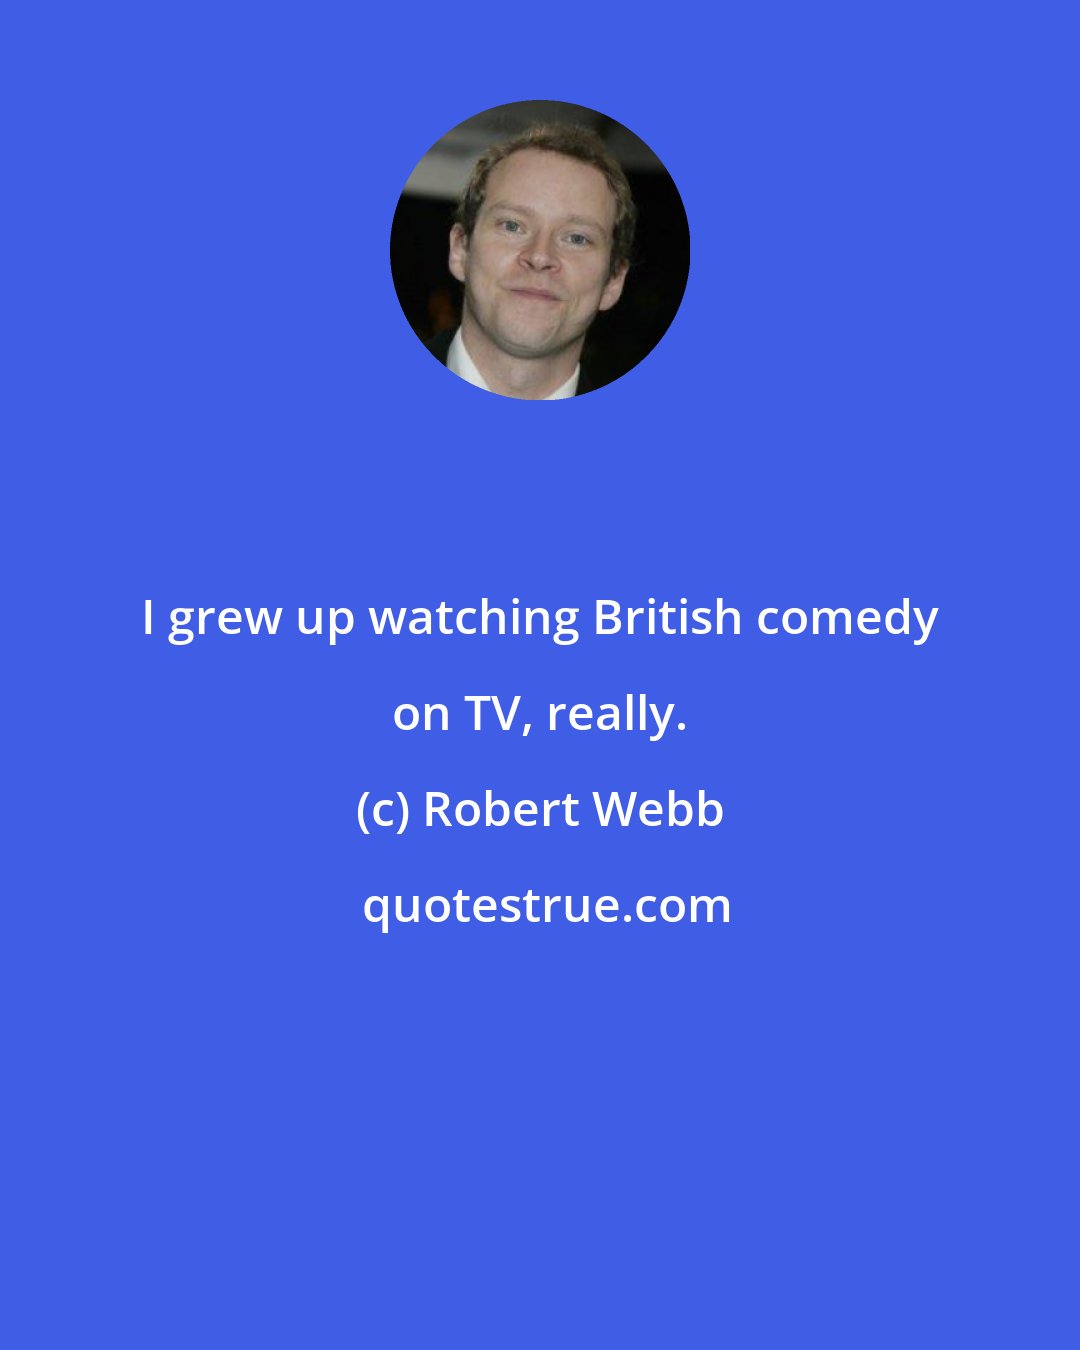 Robert Webb: I grew up watching British comedy on TV, really.